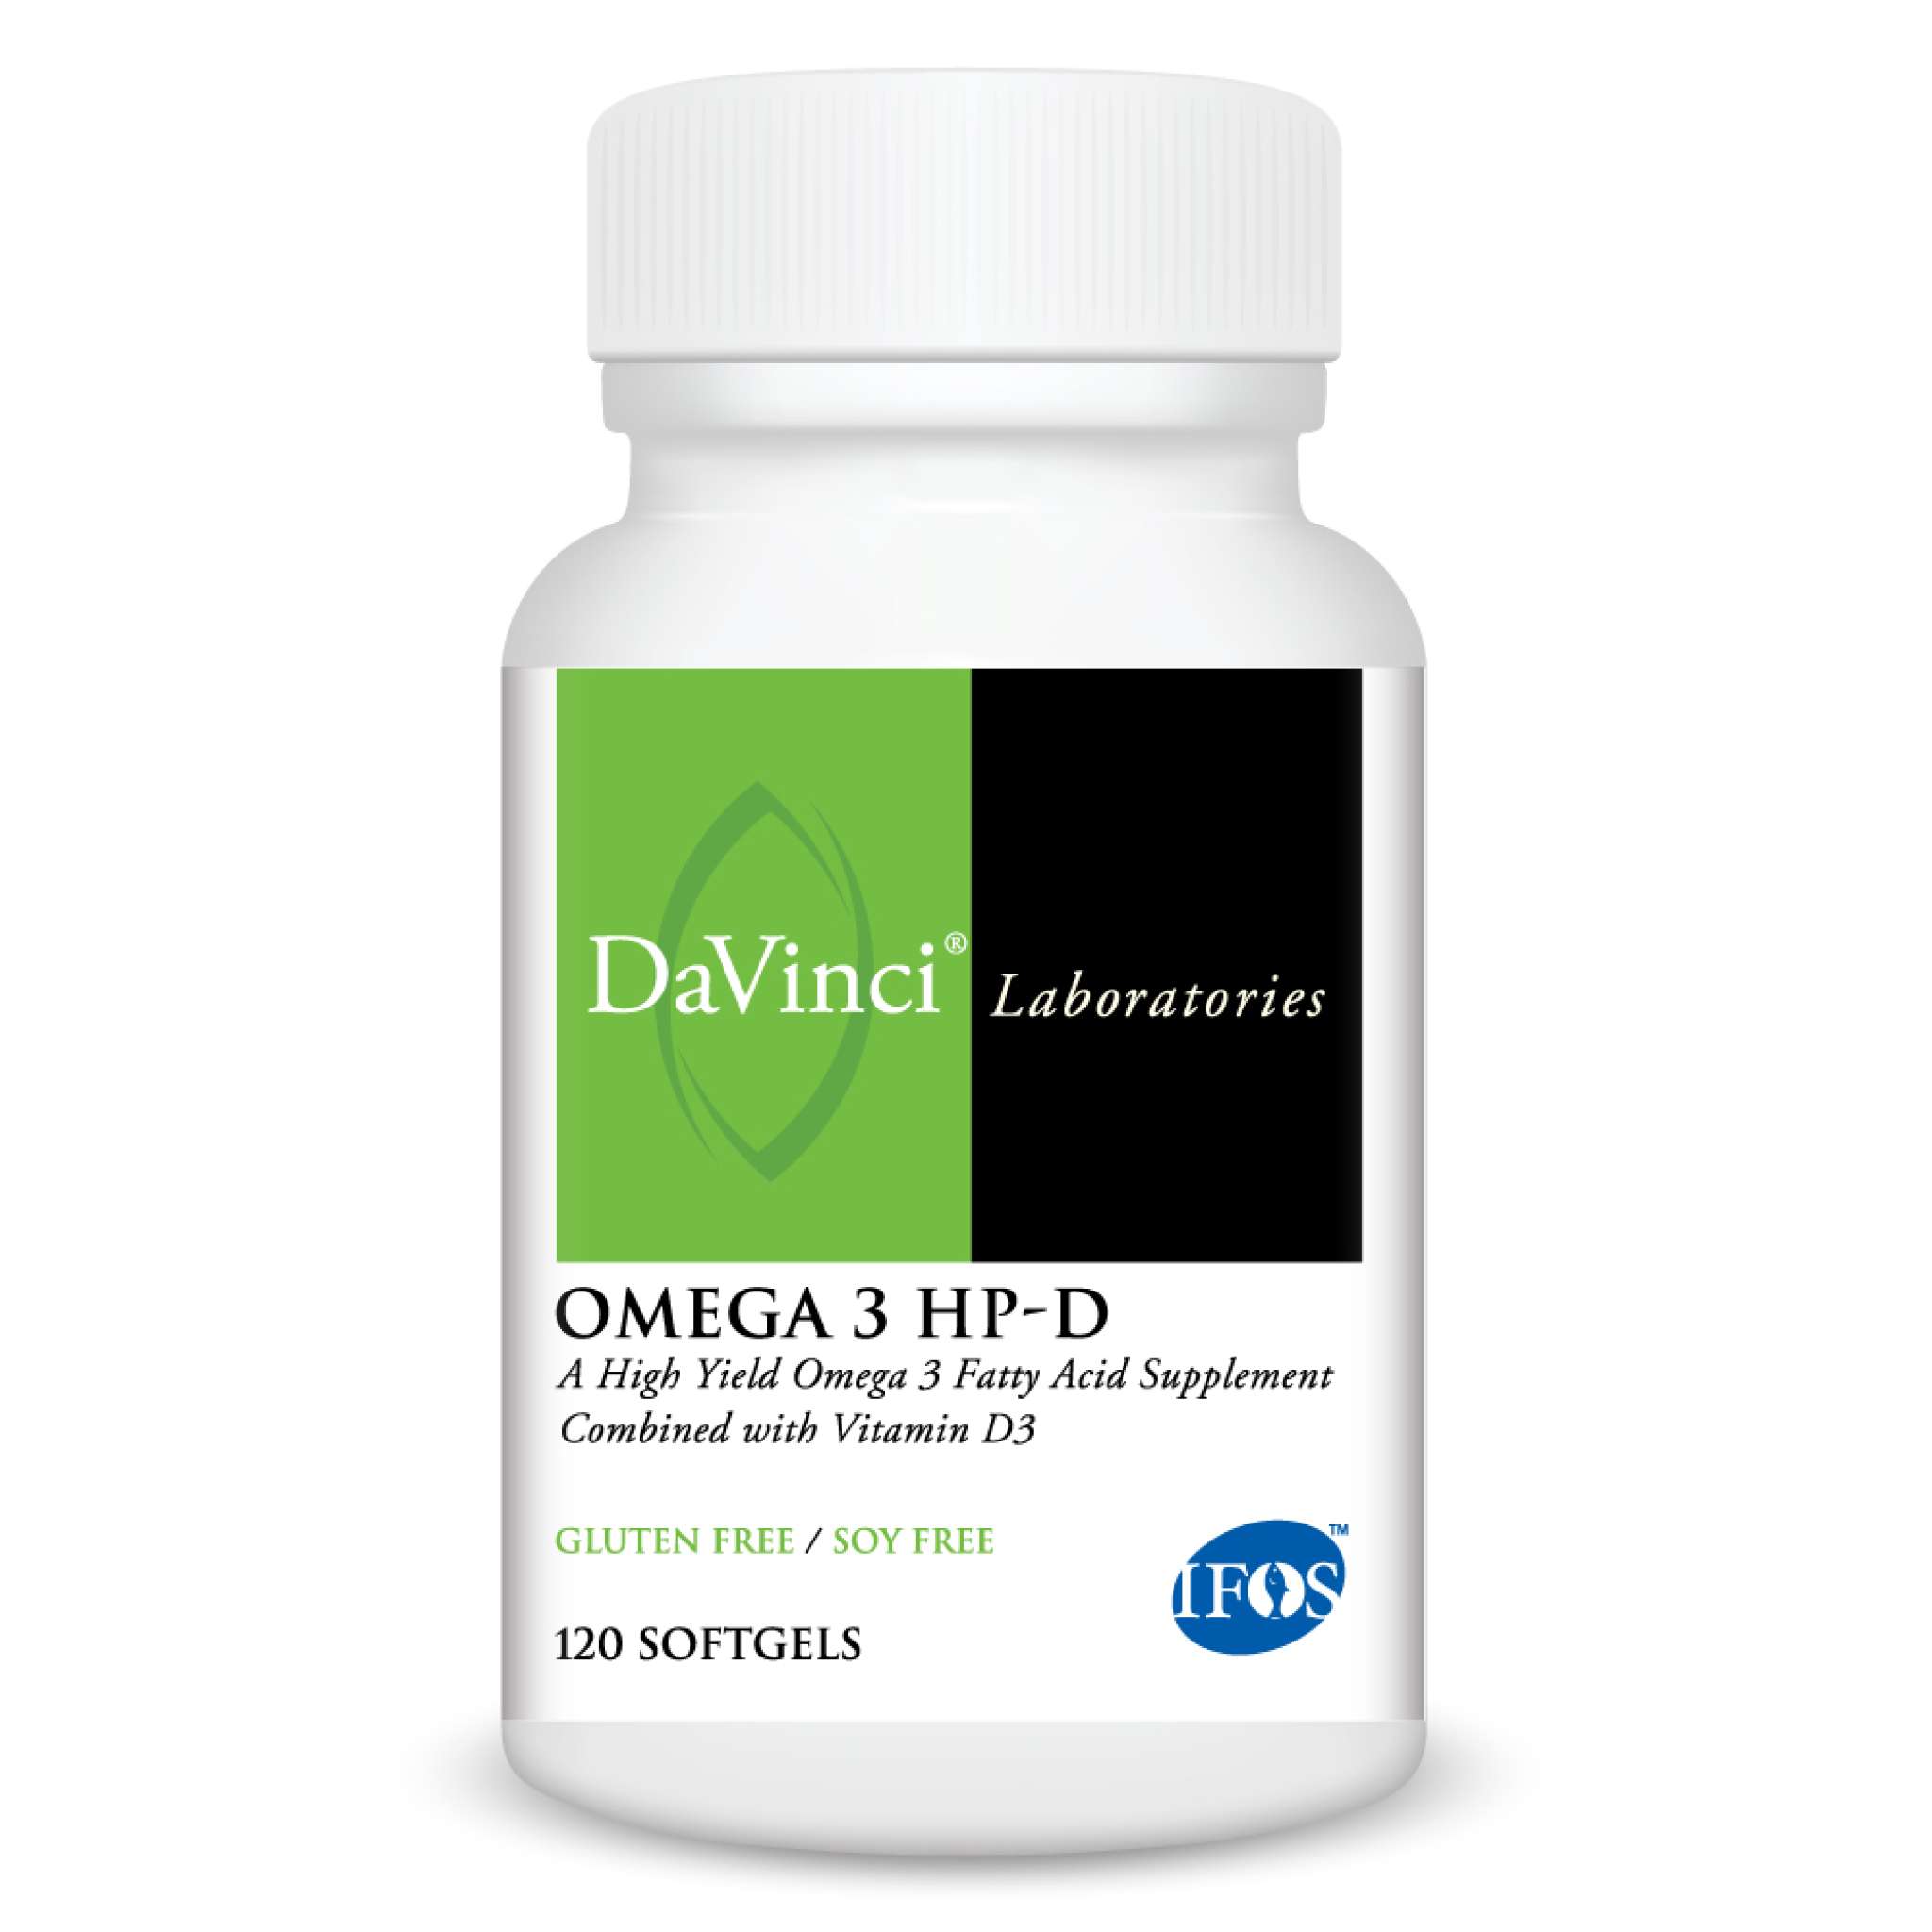 Davinci Laboratories - Omega 3 Hp D softgel